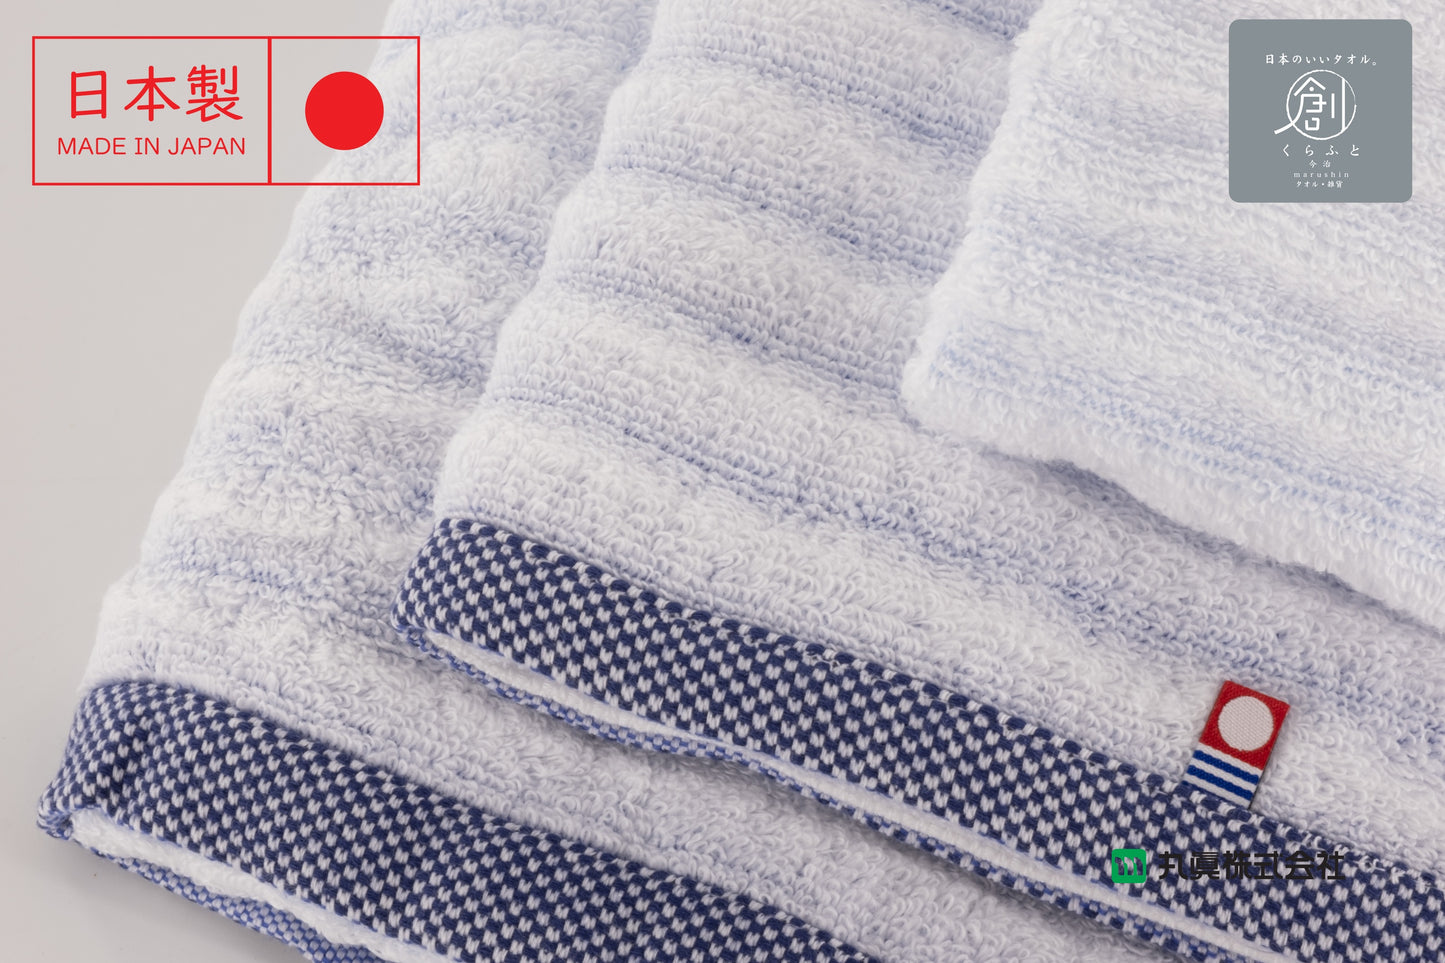 Imabari "Craft" Star plus Blue Zero Twist Towel